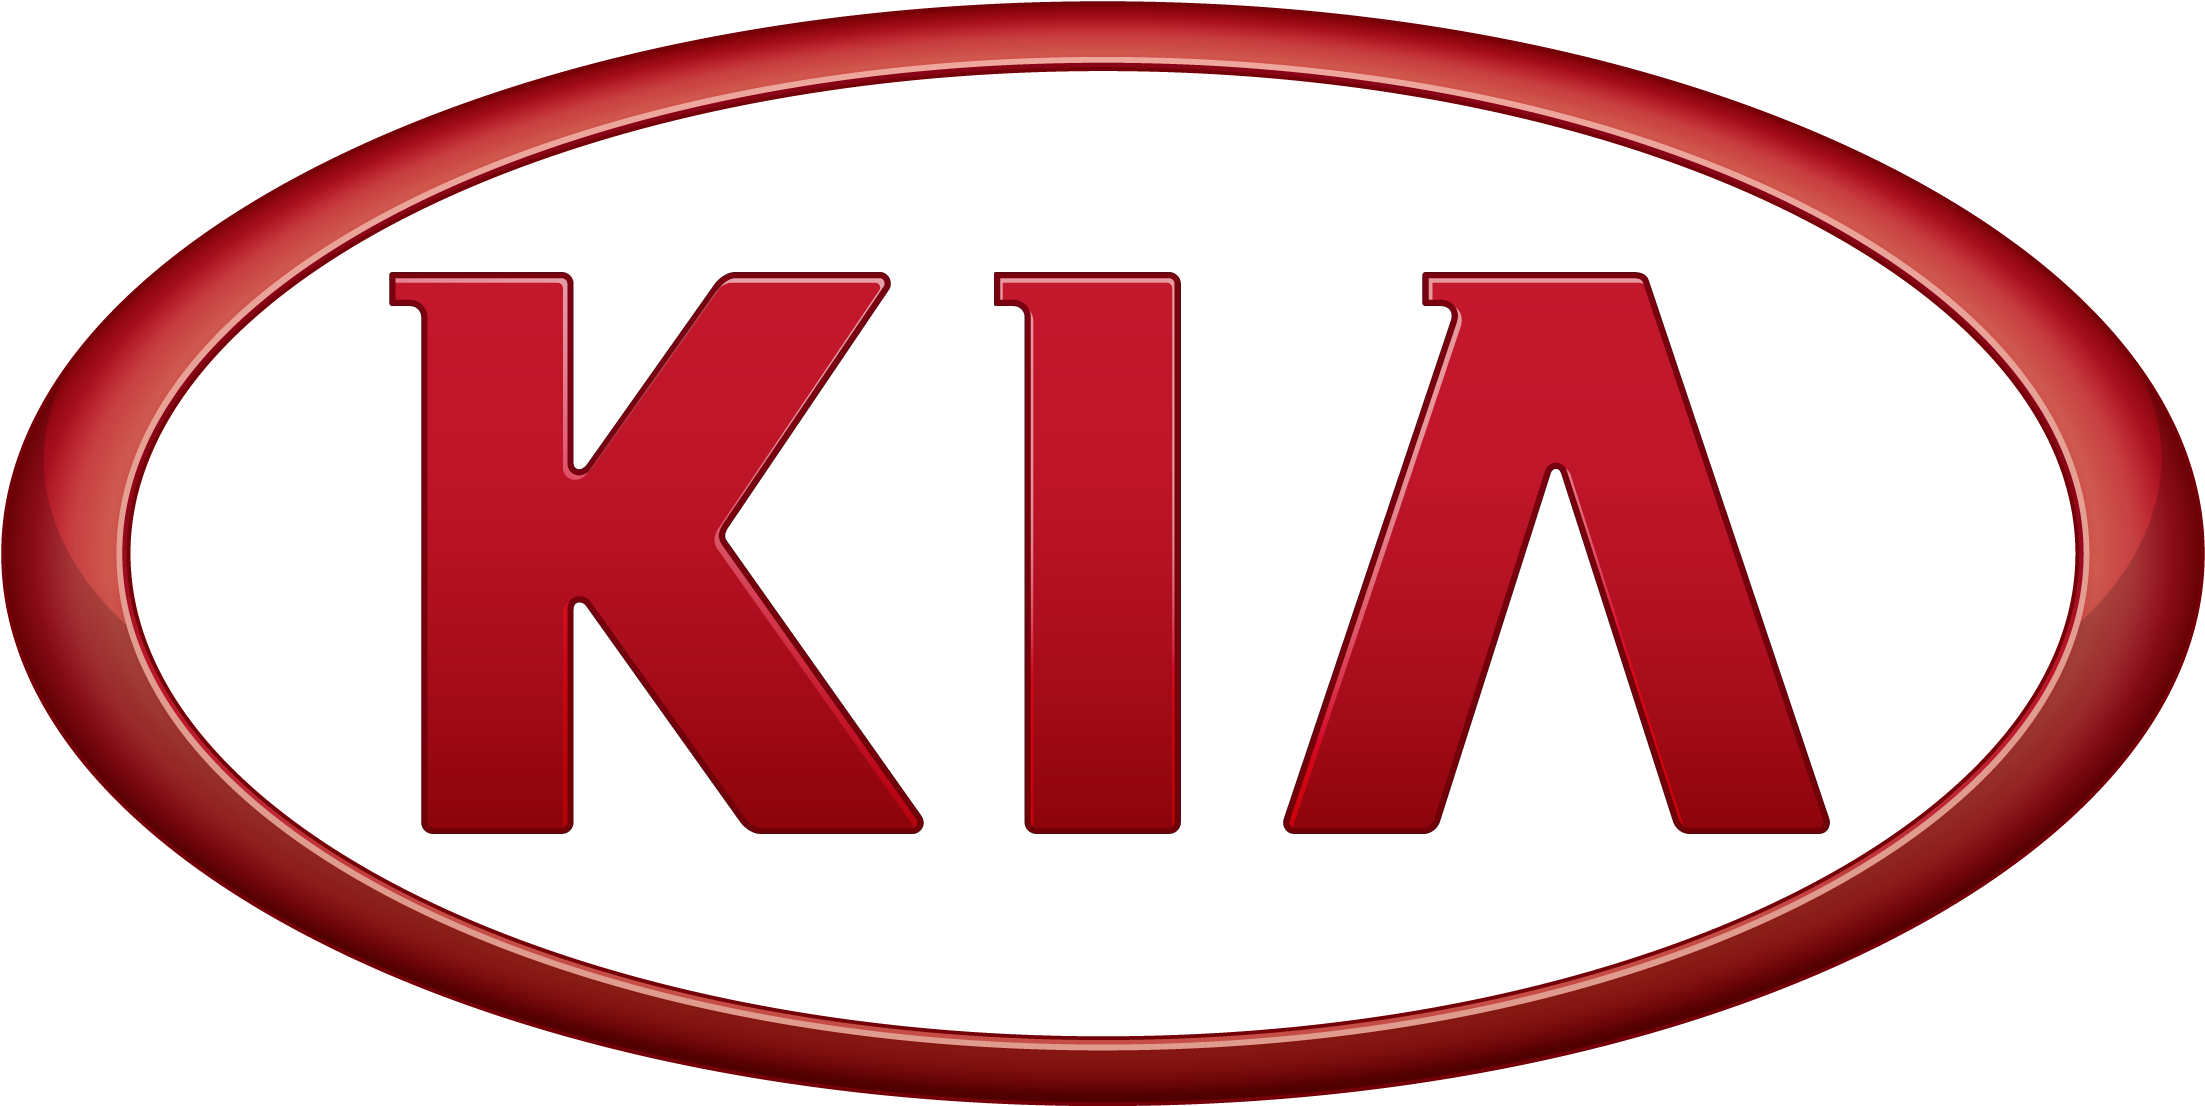 Kia Logo Kia Car Symbol Meaning And History Car Brand - Kia Logo Png (2480x1444)